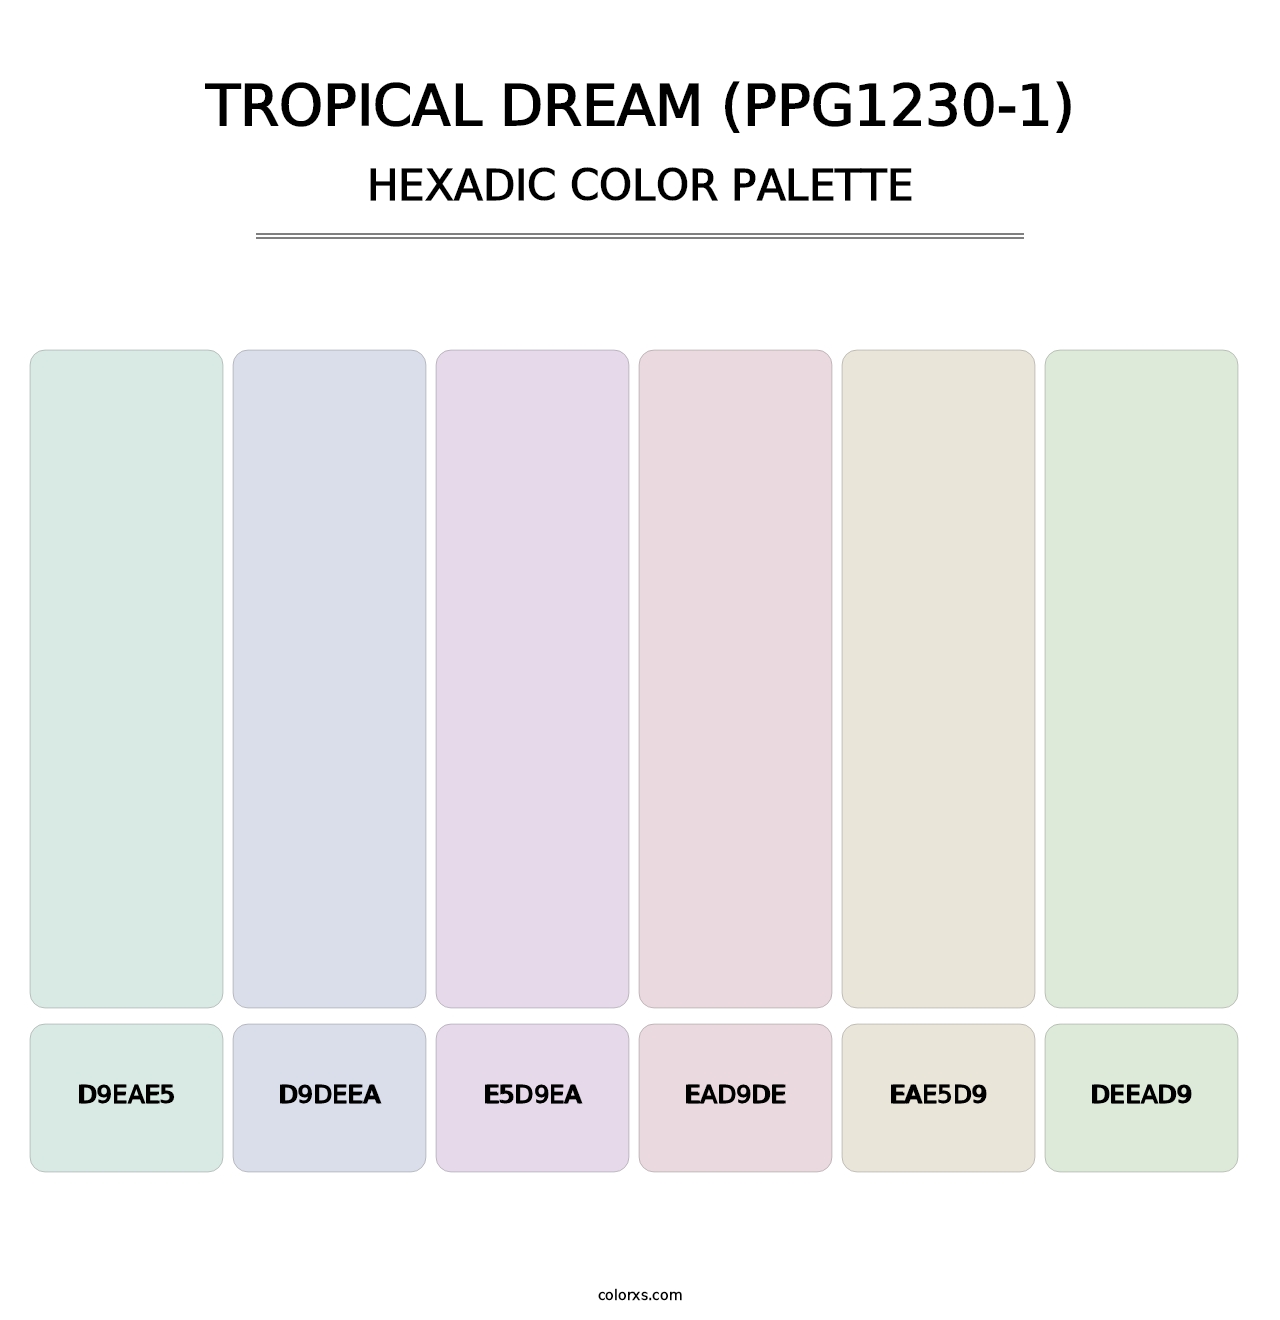 Tropical Dream (PPG1230-1) - Hexadic Color Palette